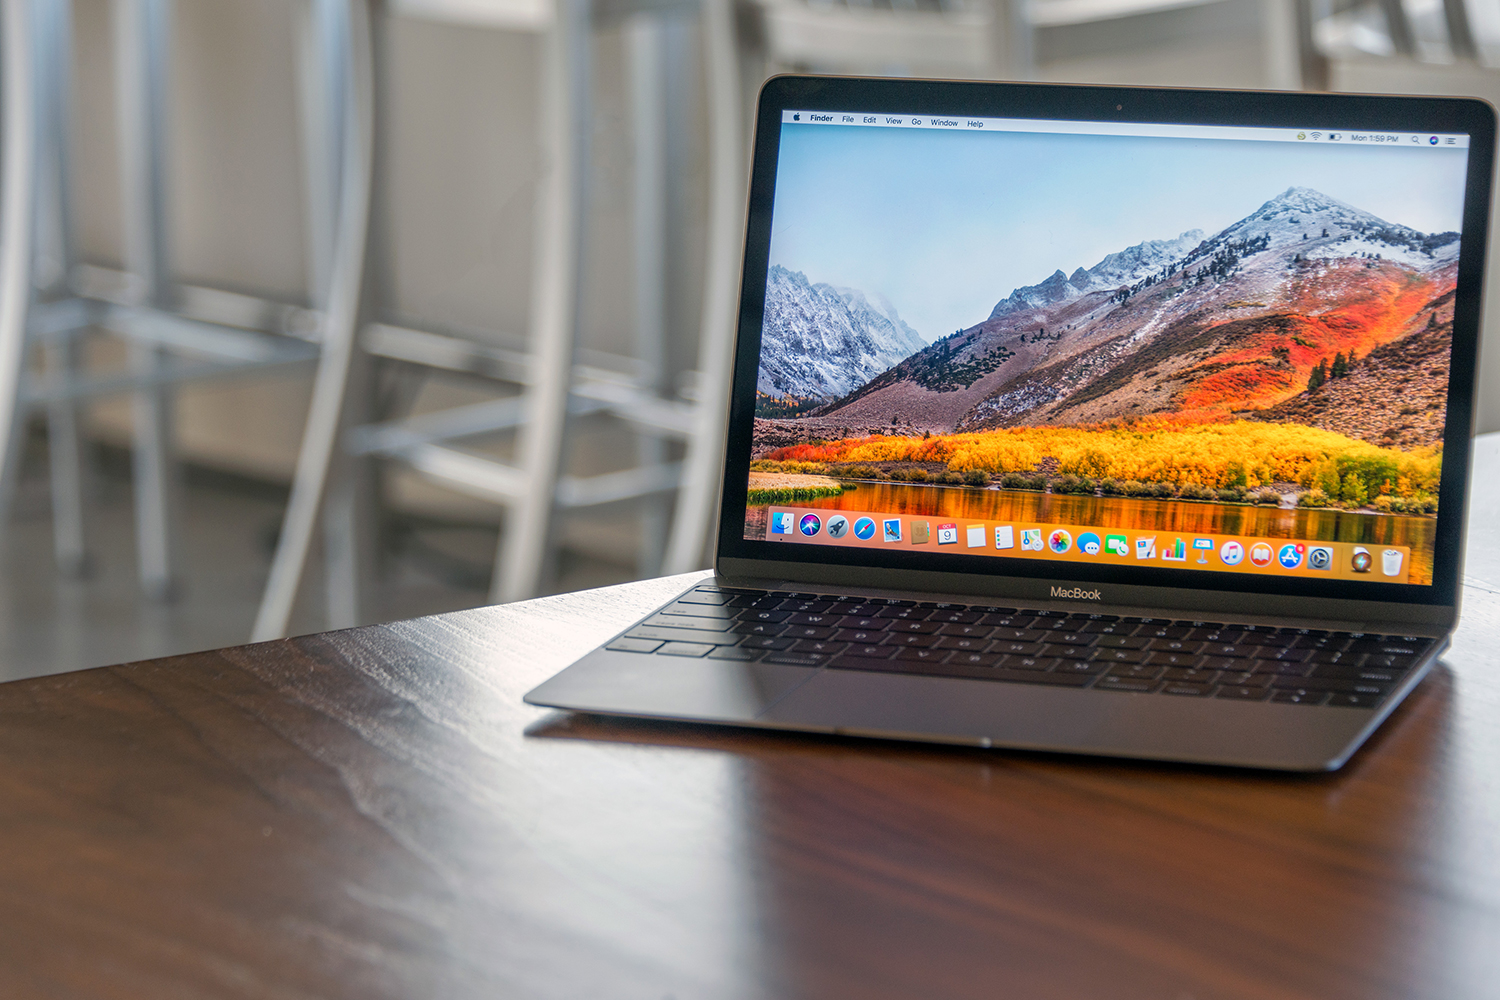 Your MacBook Air needs this slim, lightweight hub